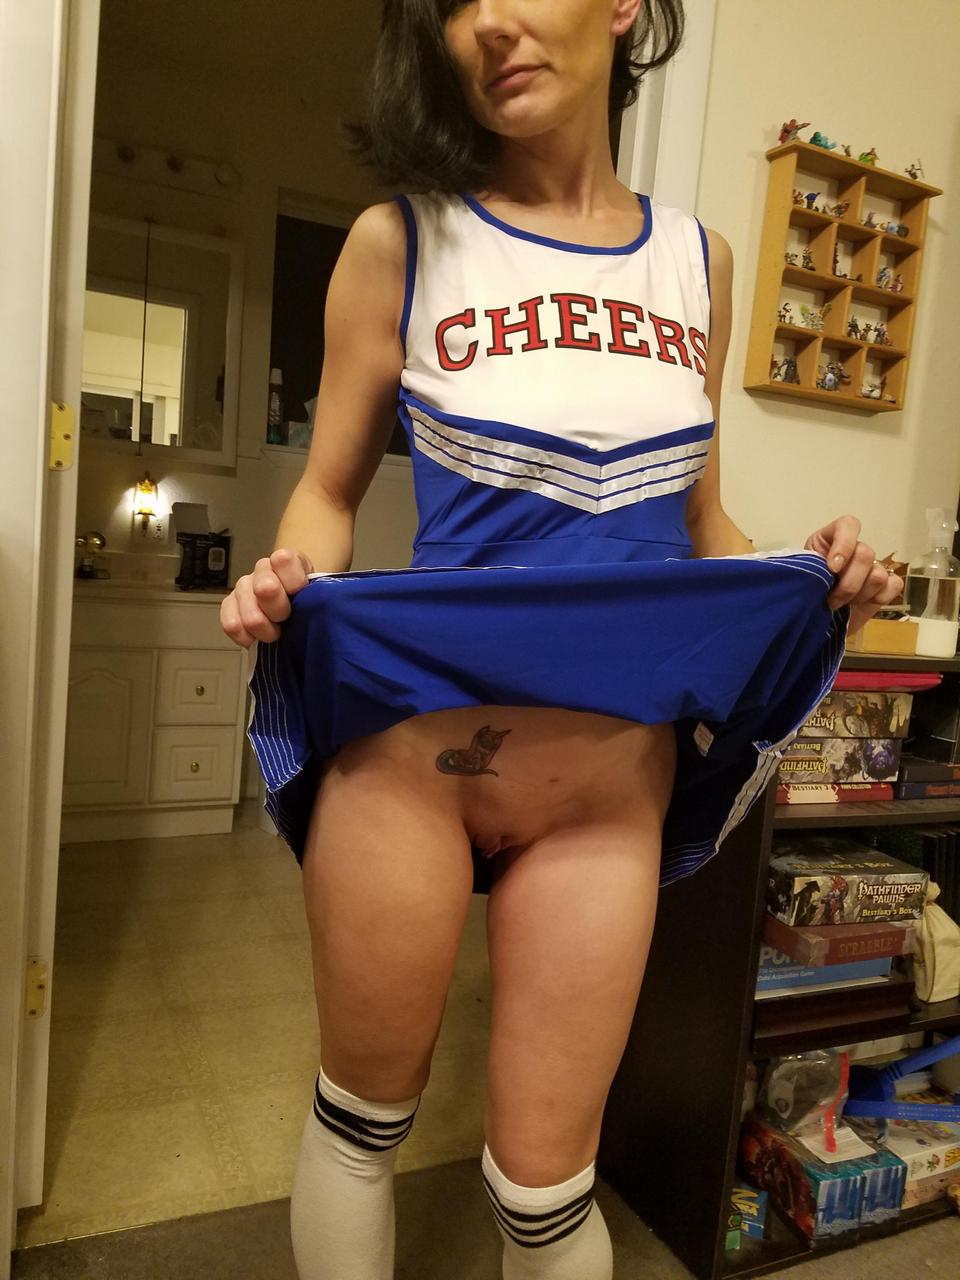 Any Love For Slutty Cheerleaders